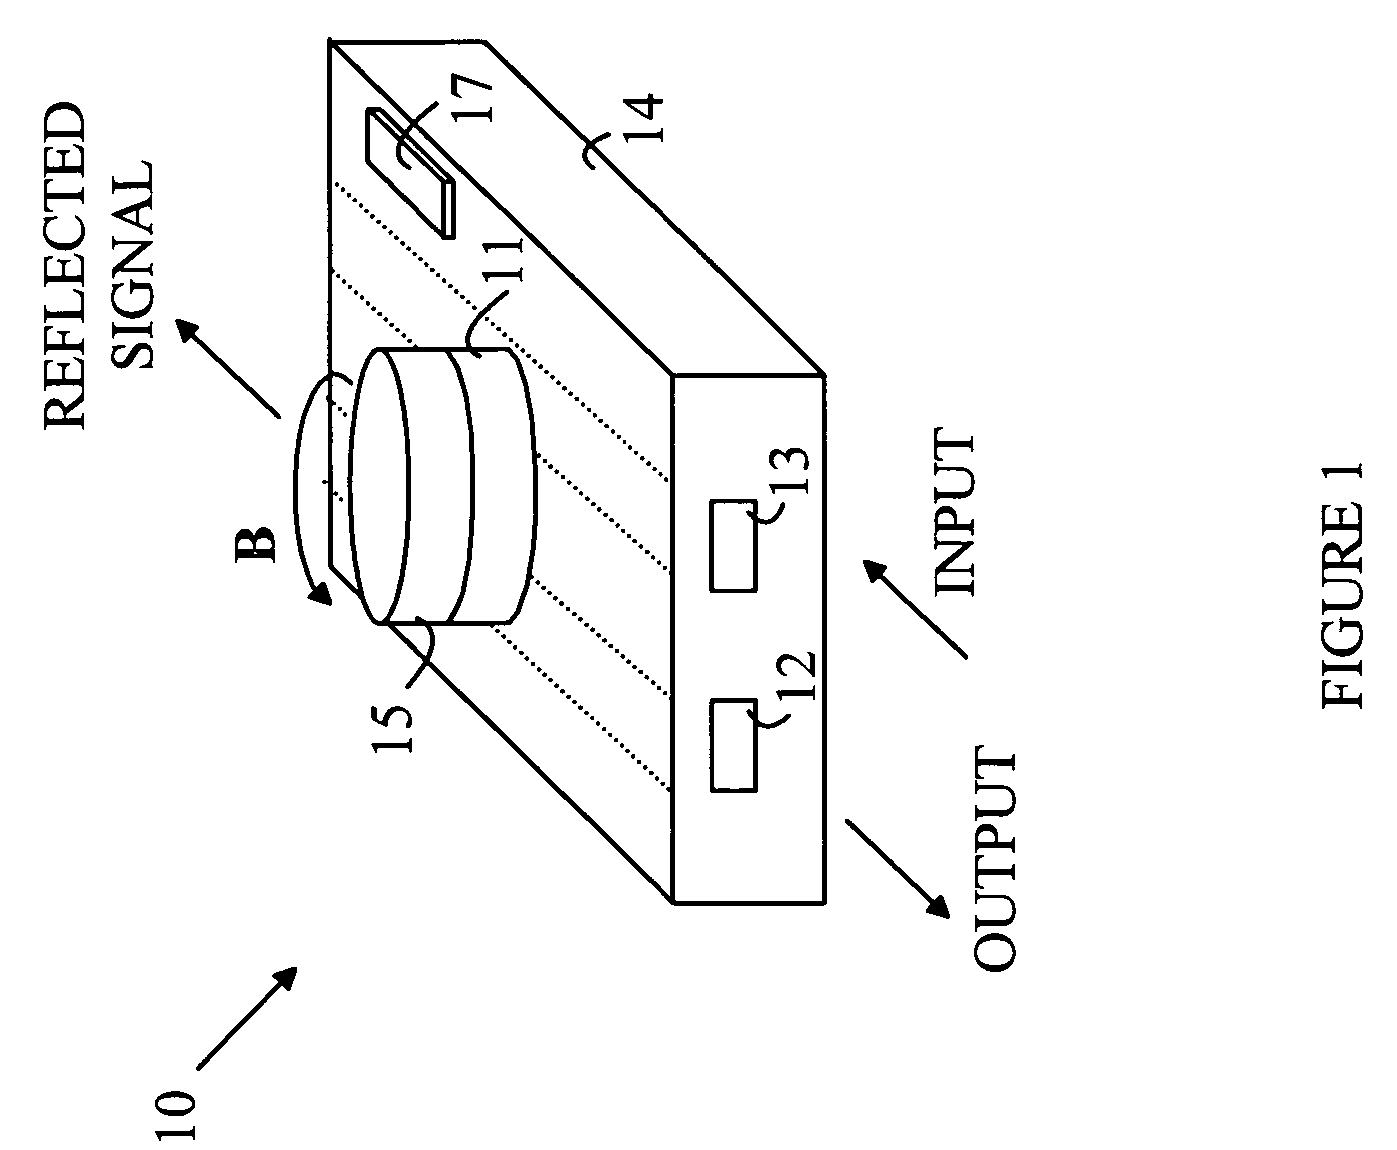 Optical isolator utilizing a micro-resonator